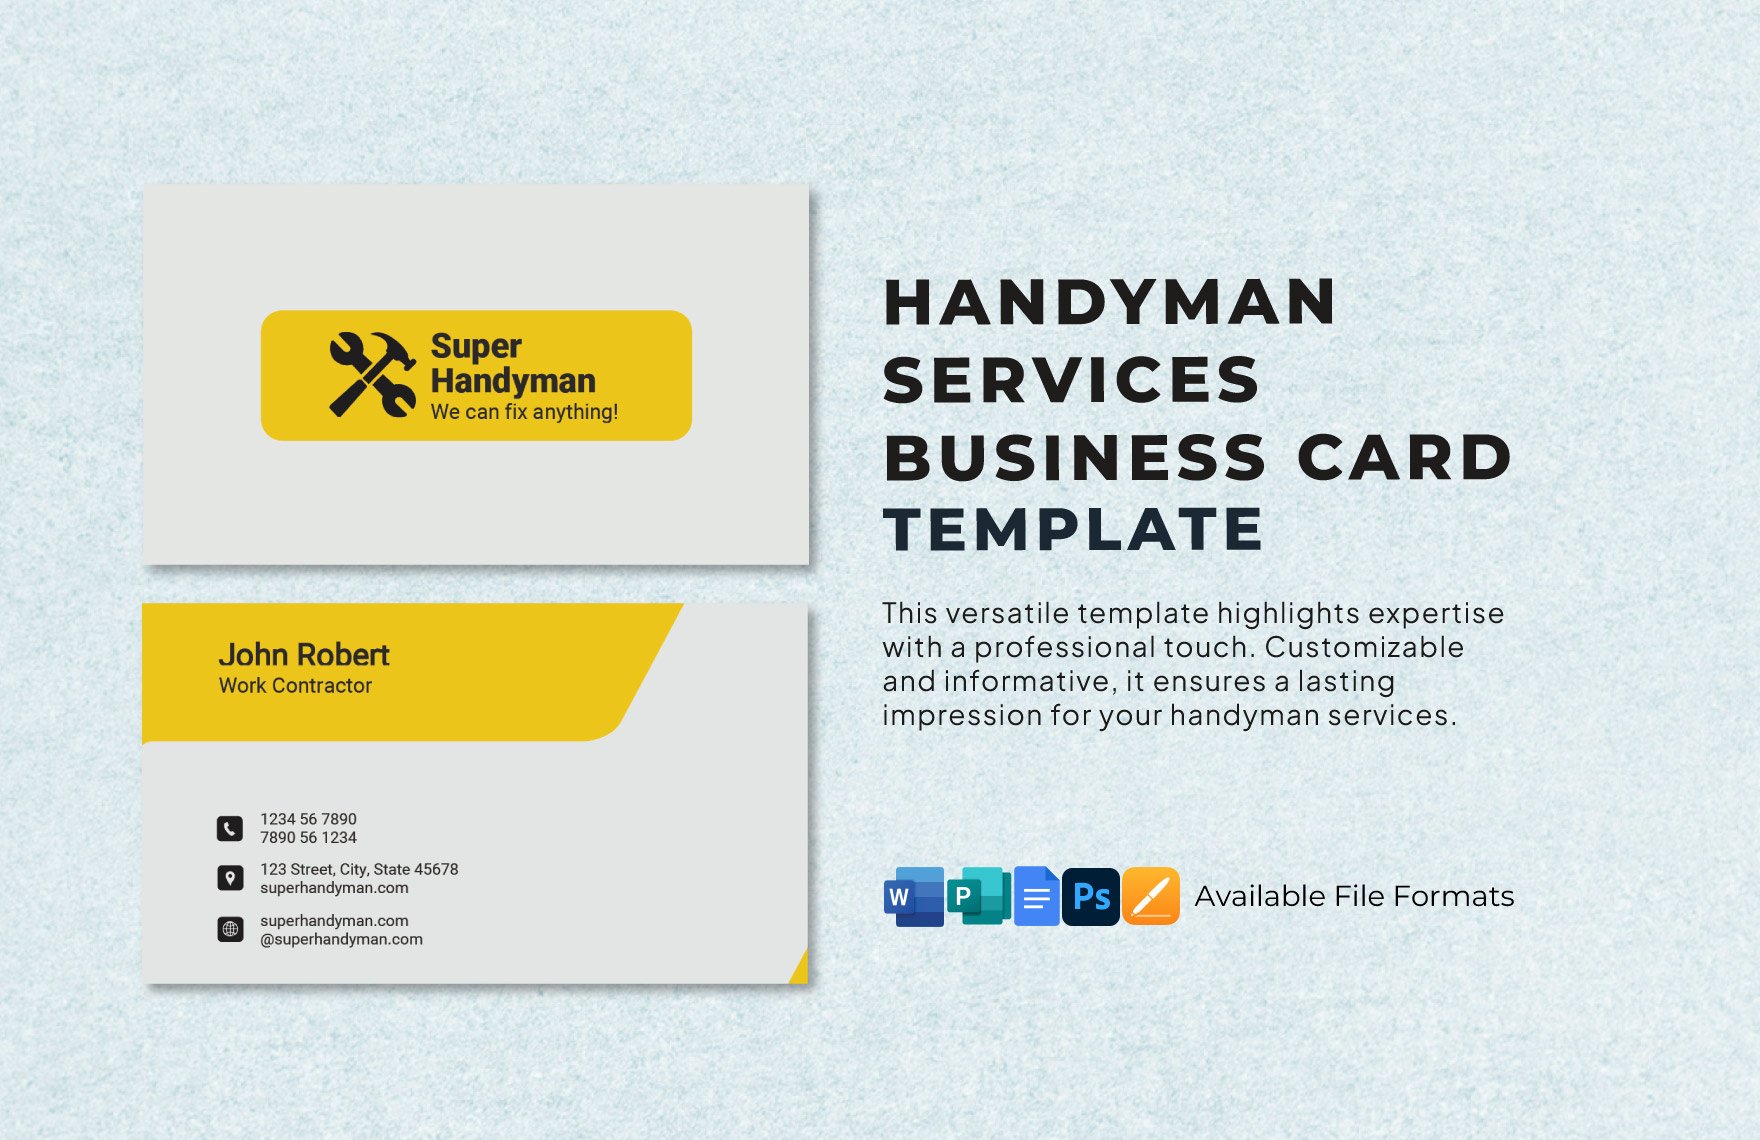 Handyman Services Business Card Template